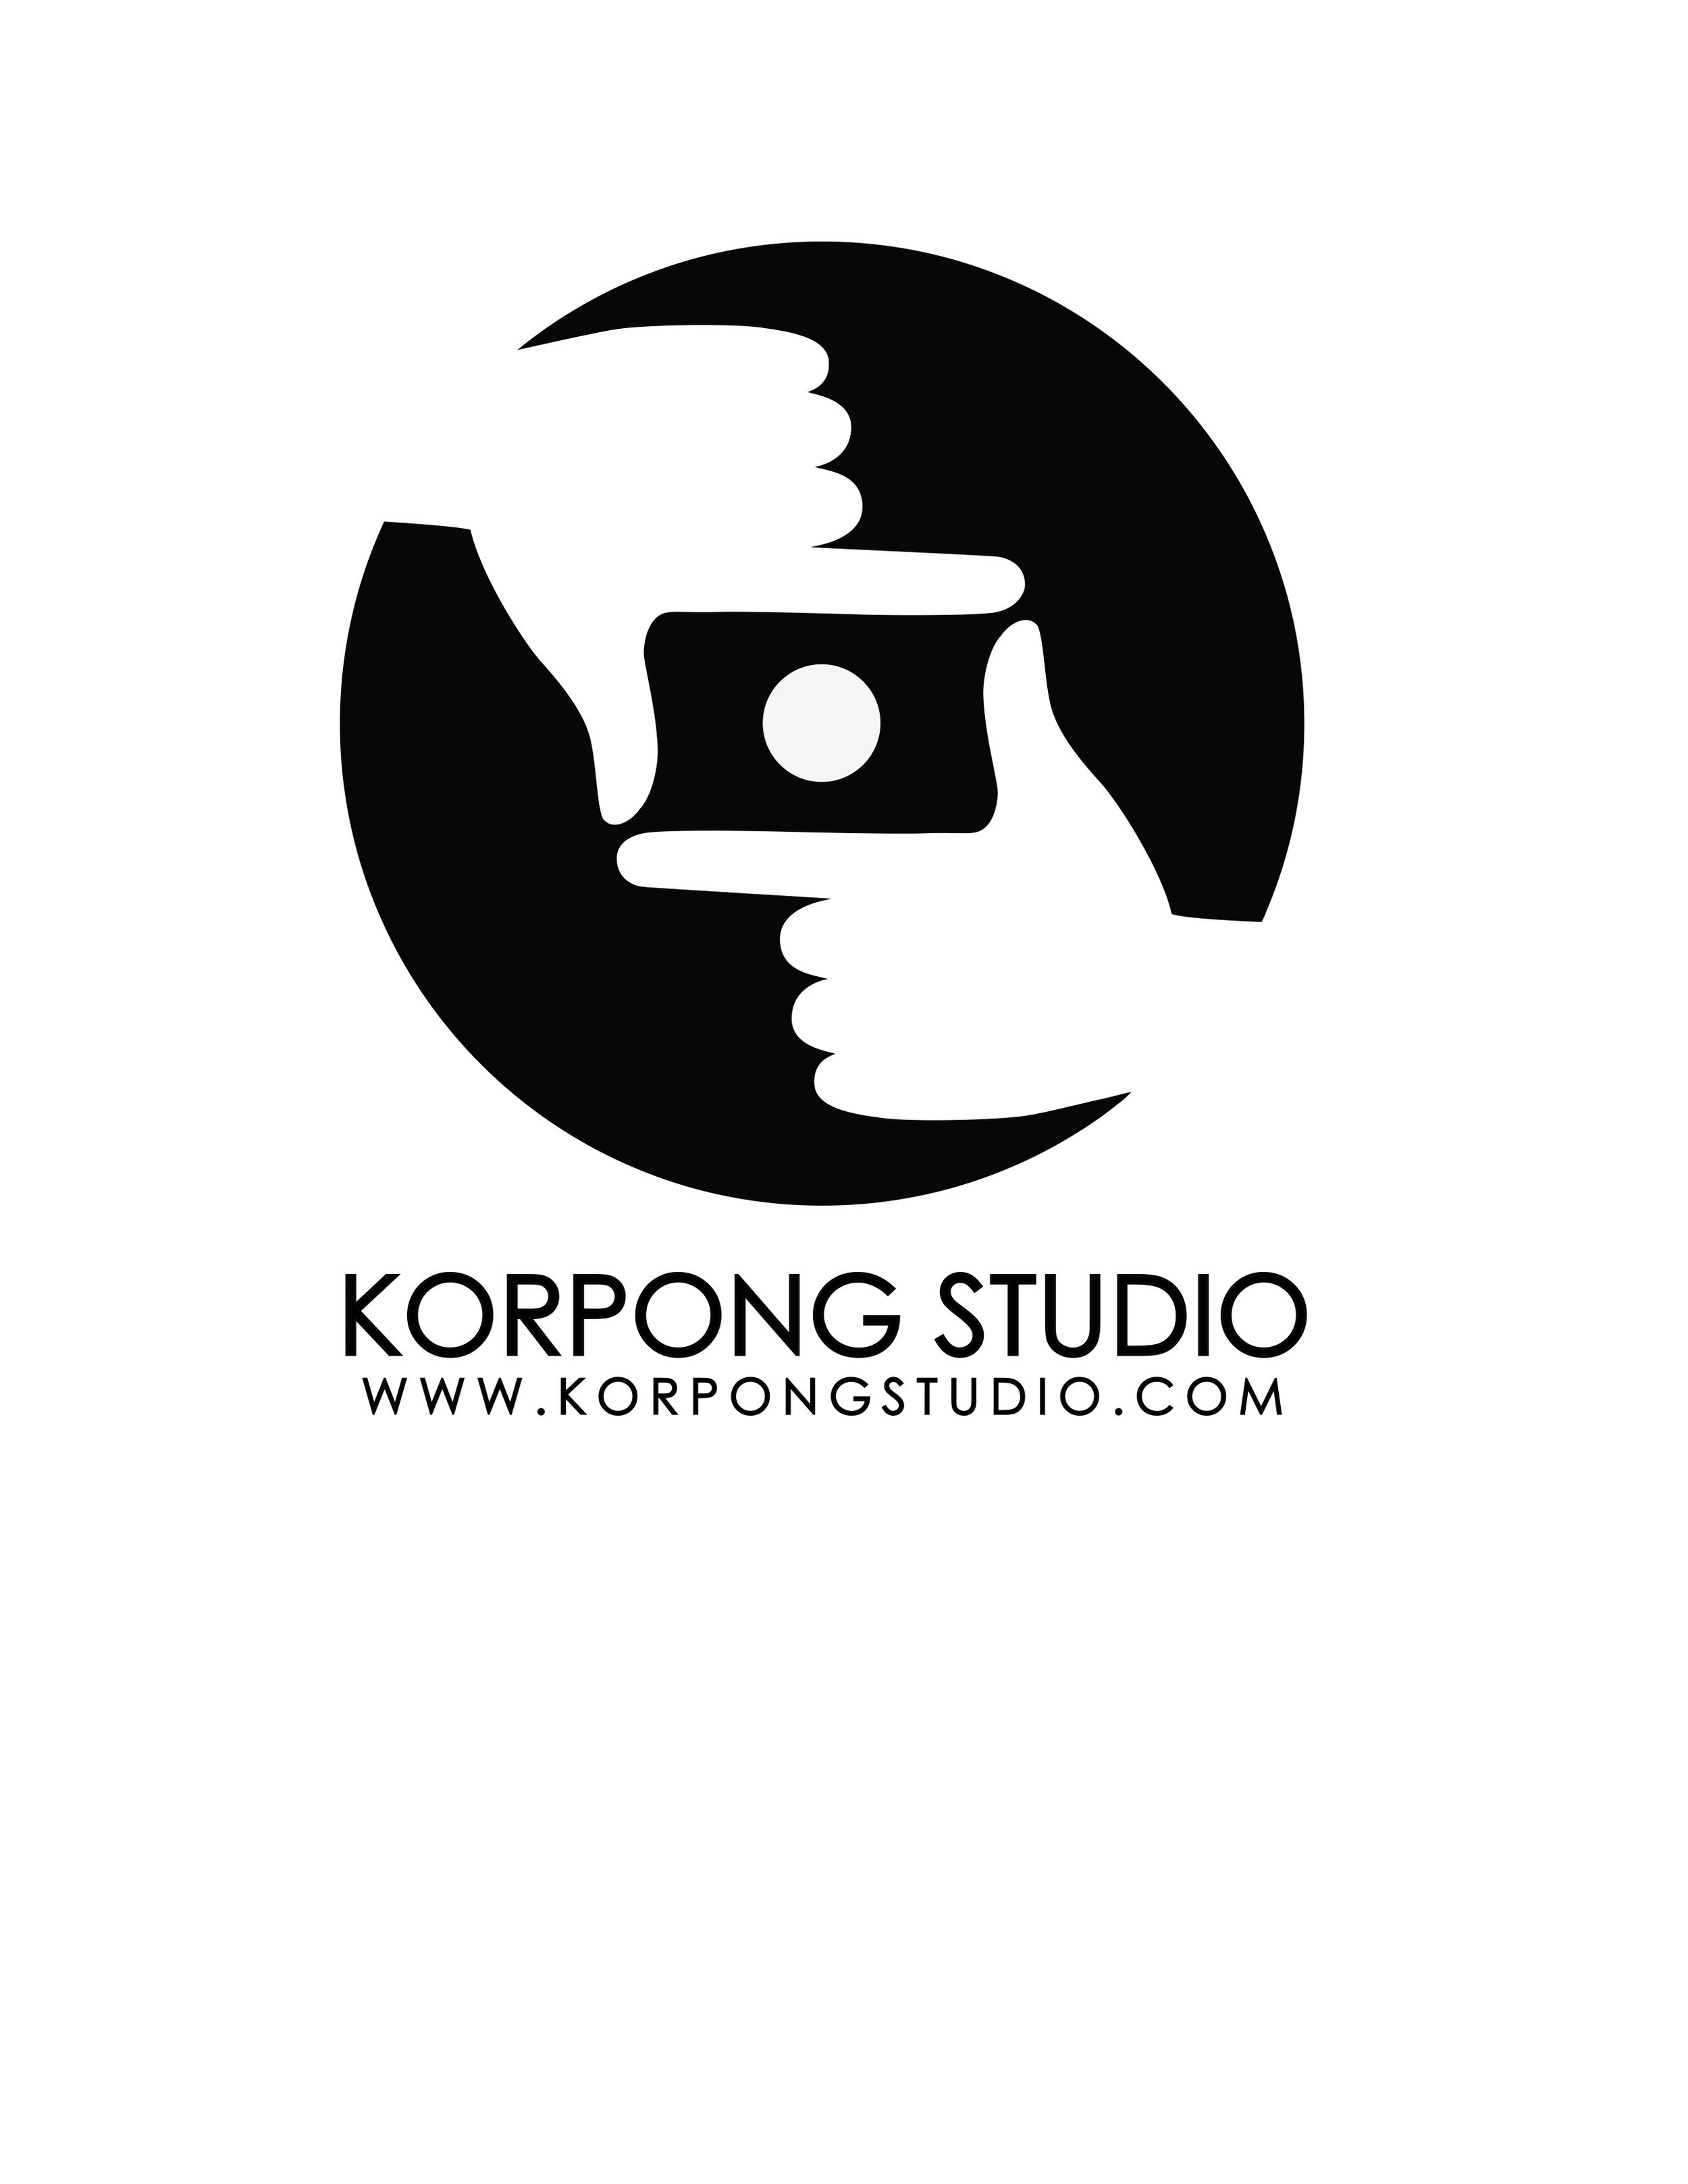 KORPONG STUDIO LOGO 2023.png